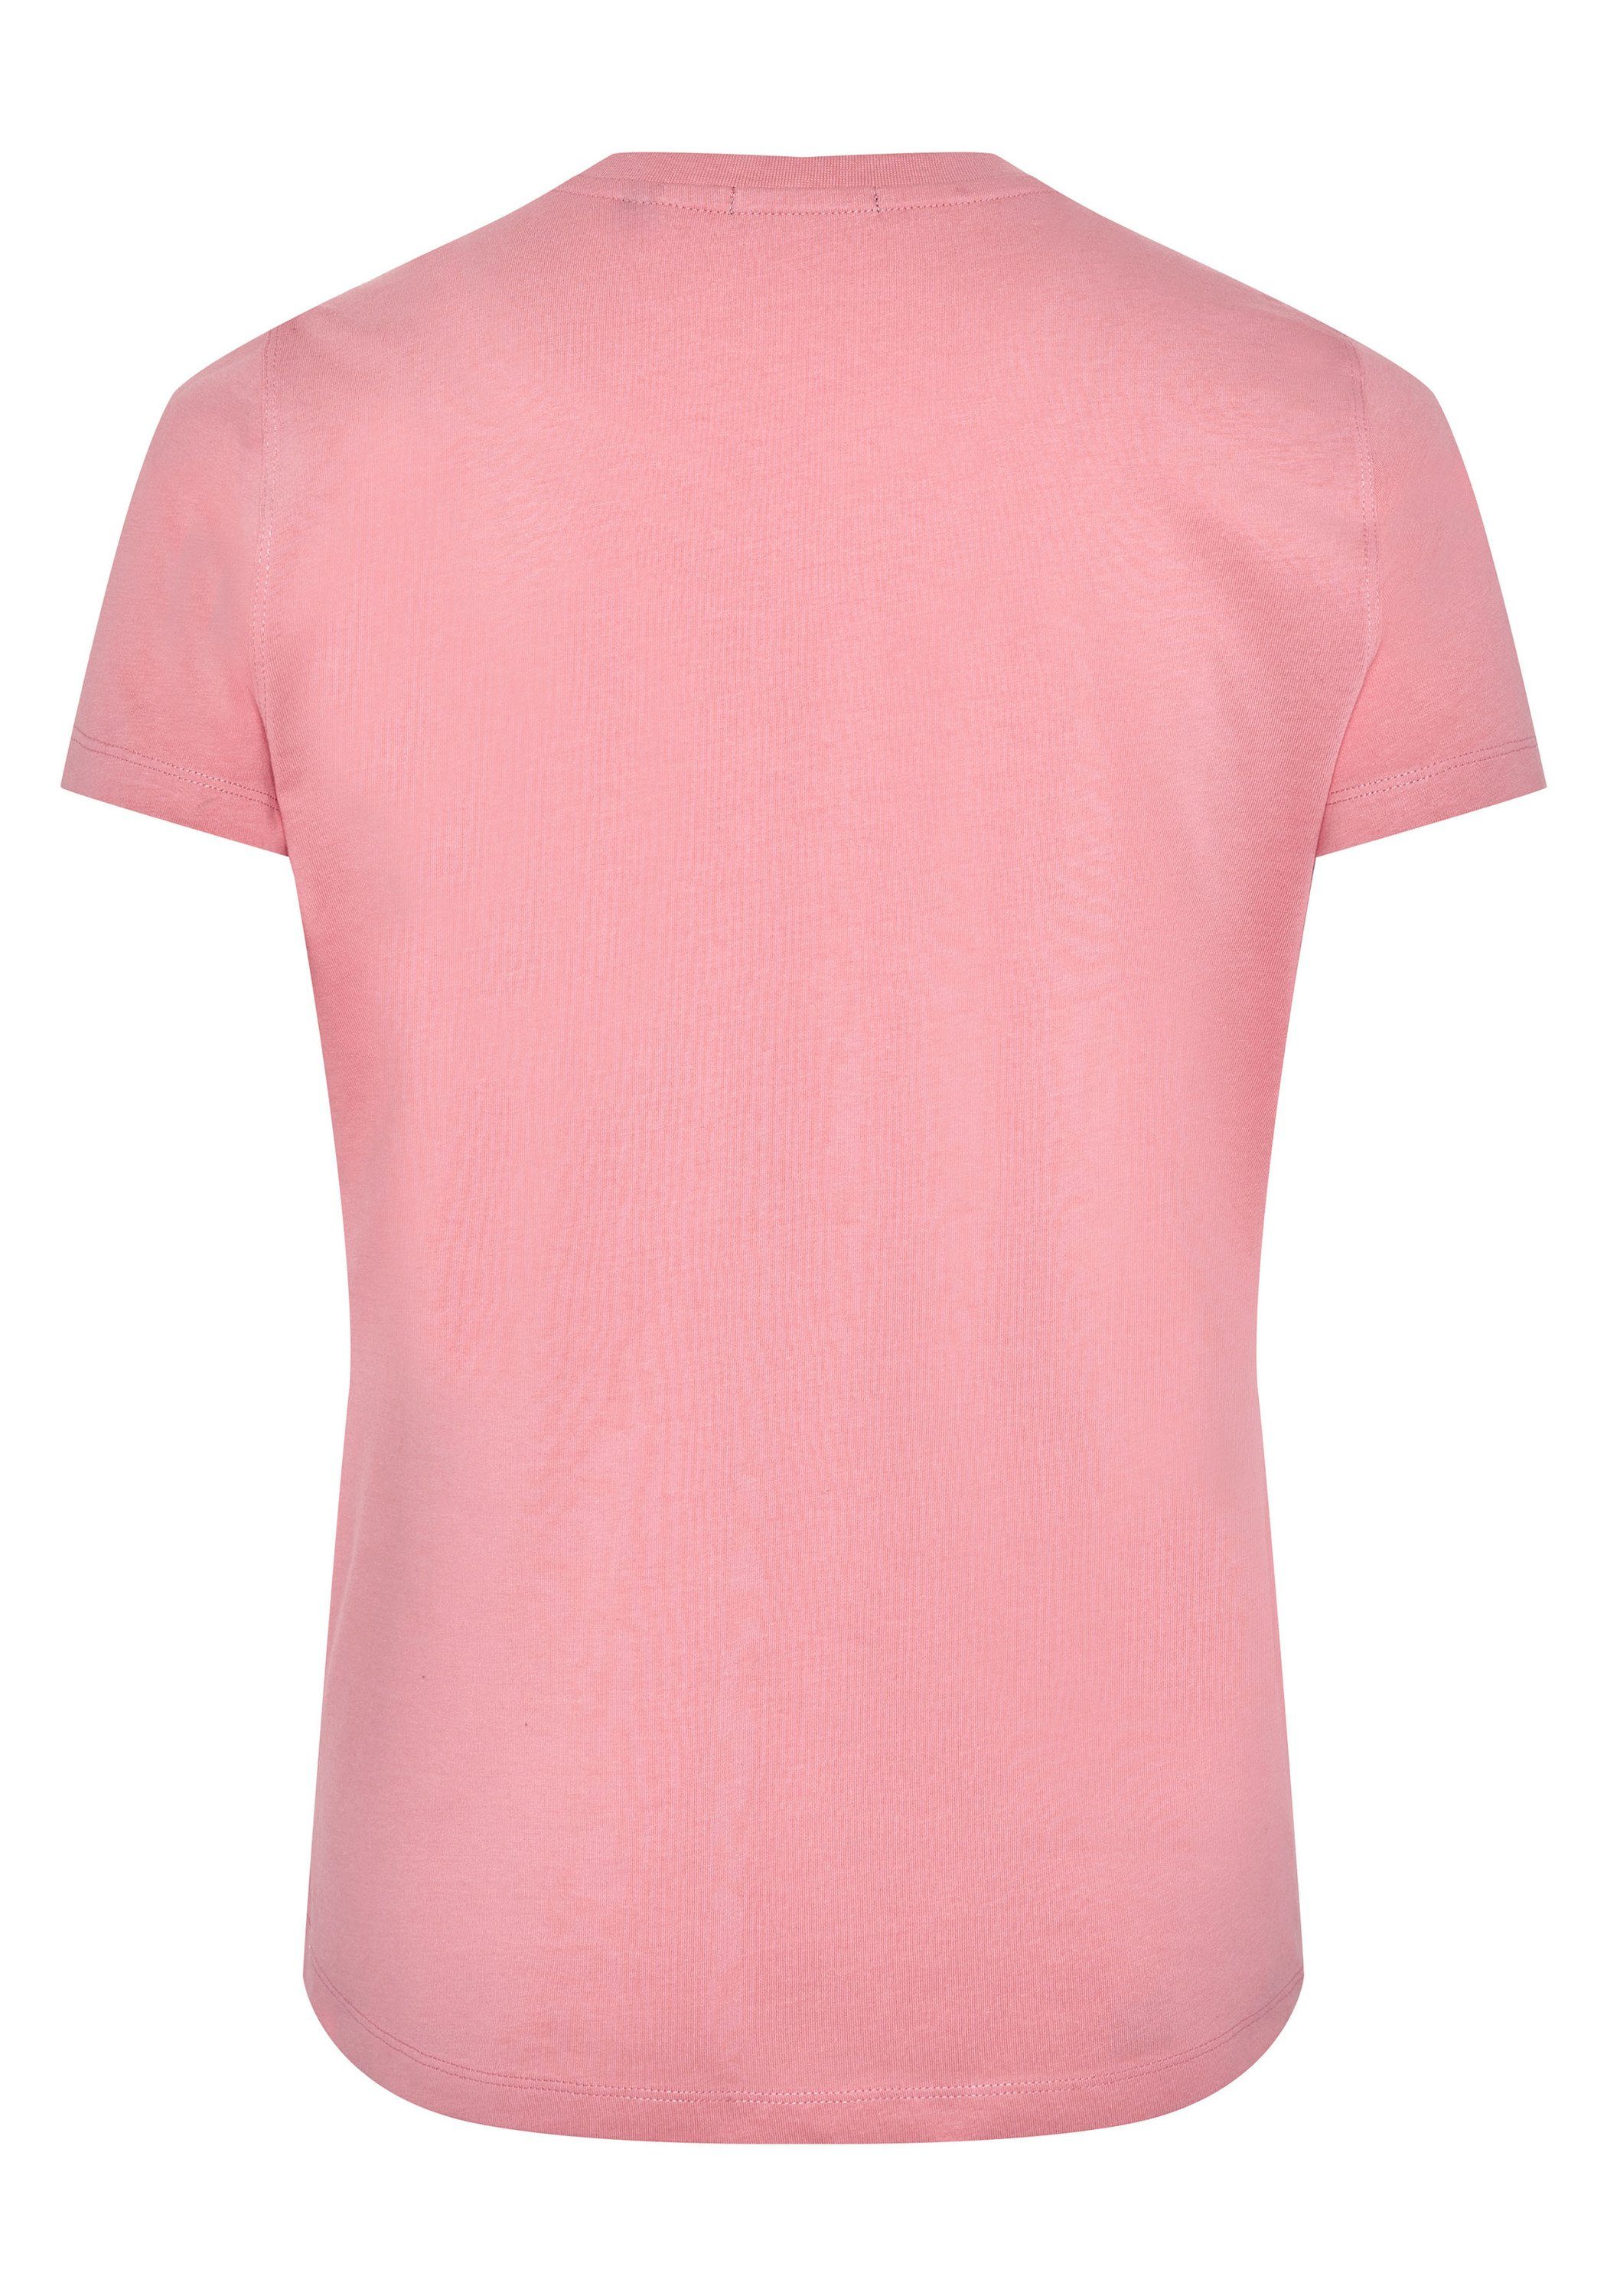 Print-Shirt Salmon Chiemsee mit Rose Jumper-Frontprint 1 T-Shirt